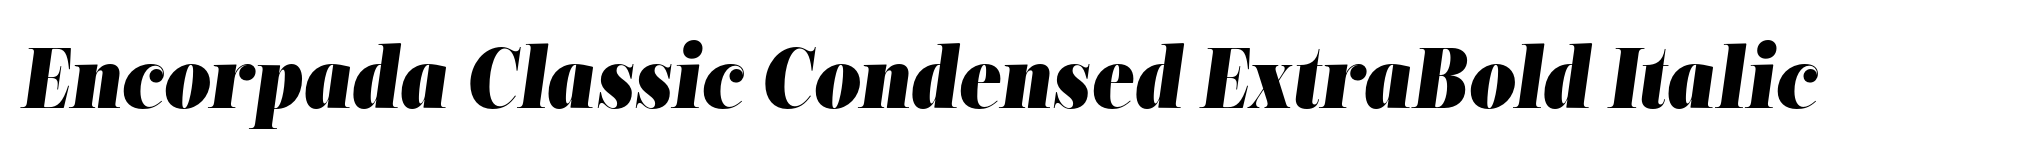 Encorpada Classic Condensed ExtraBold Italic image